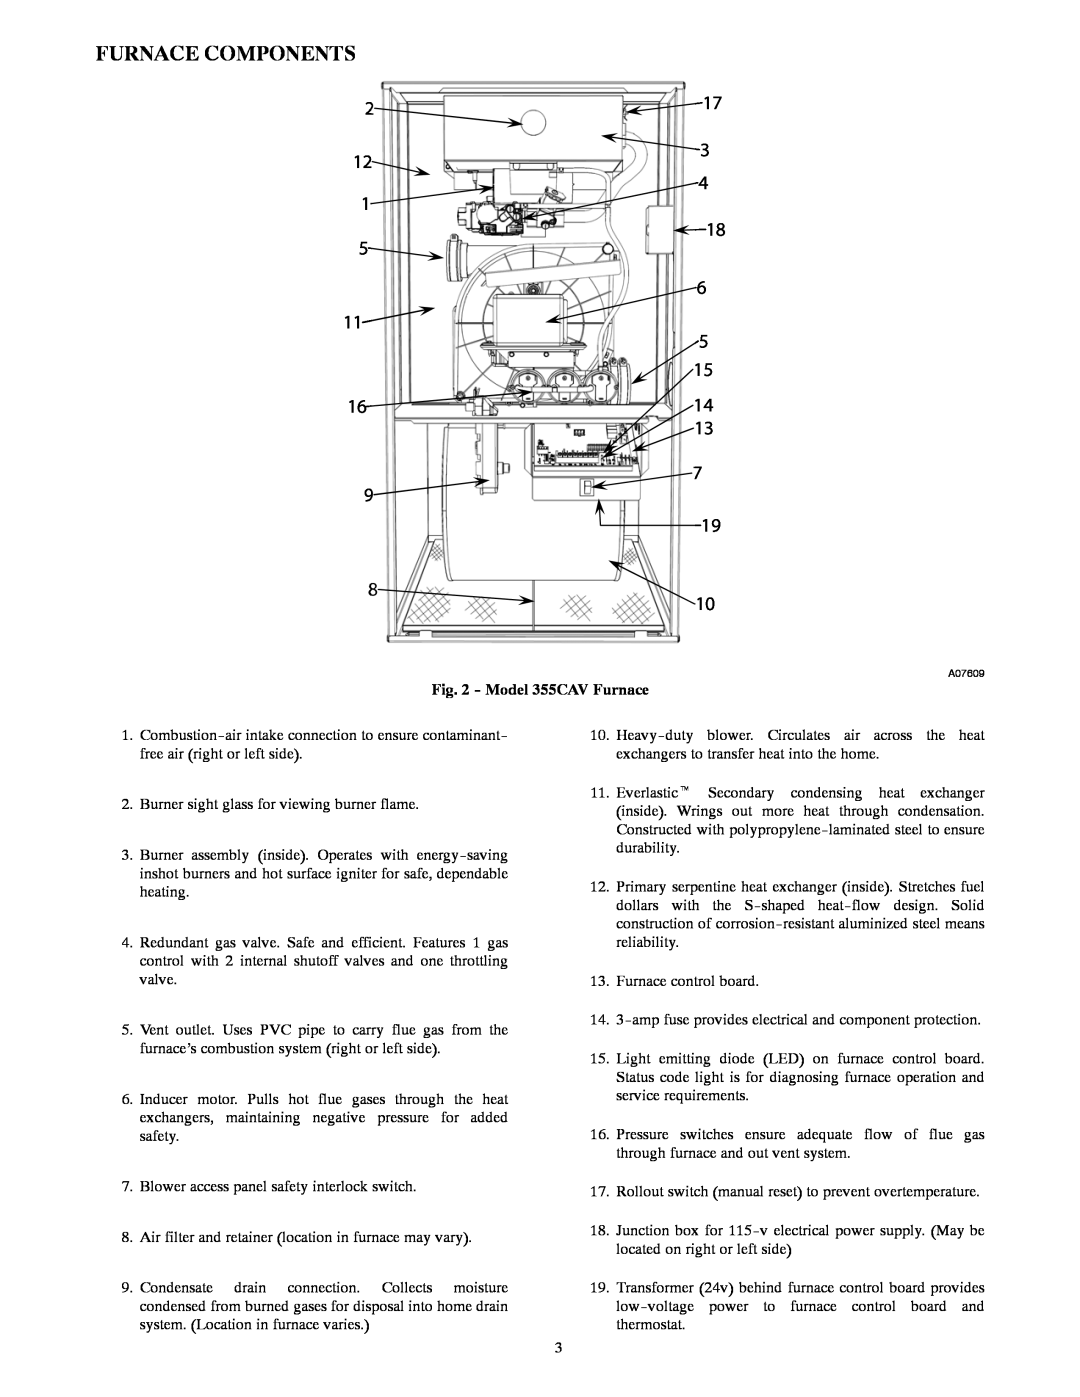 Bryant owner manual Furnace Components, Model 355CAV Furnace 